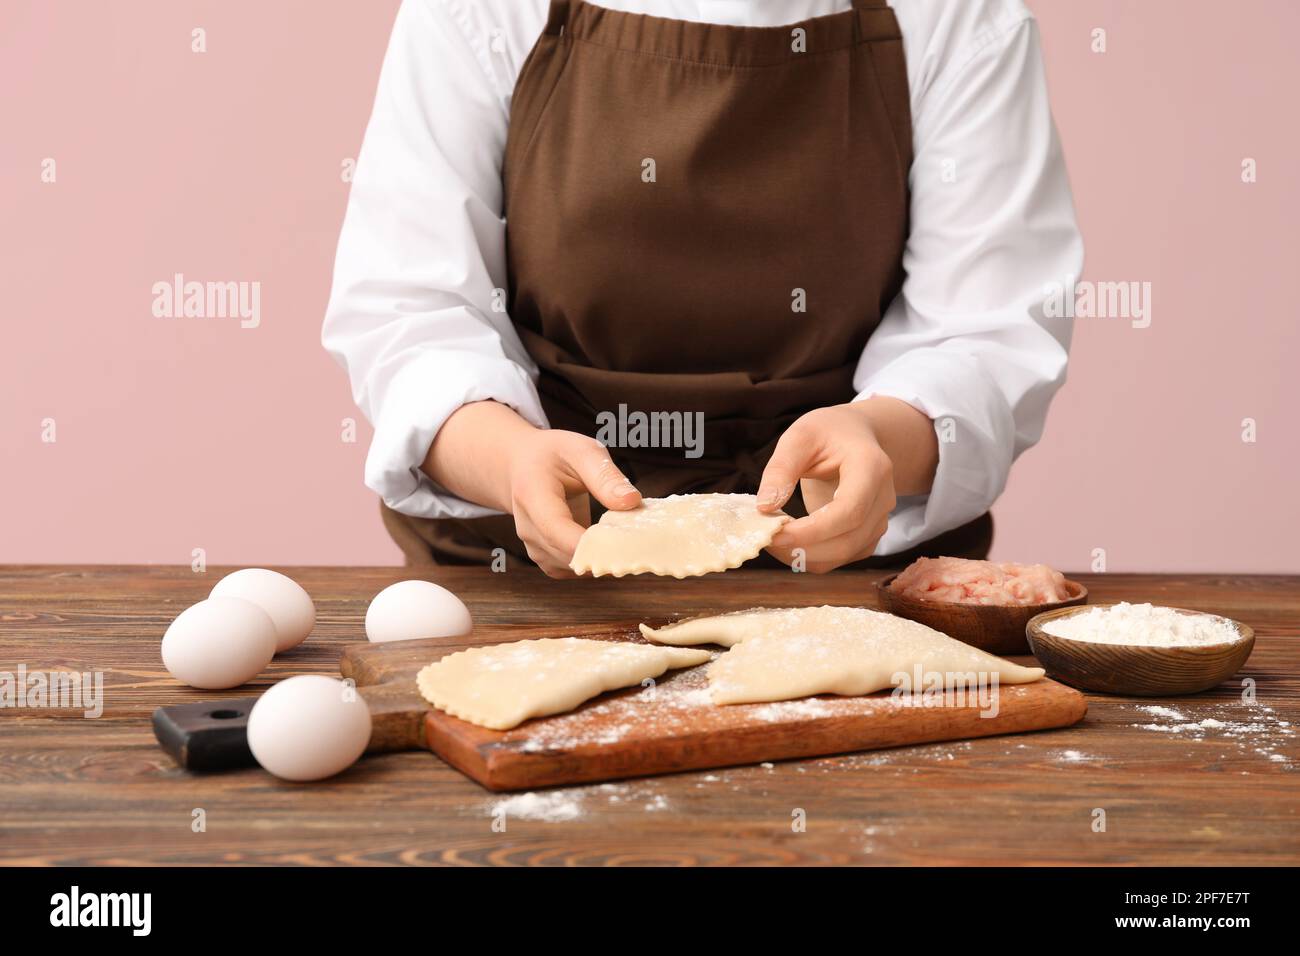 Woman preparing tasty meat empanadas at wooden table Stock Photo